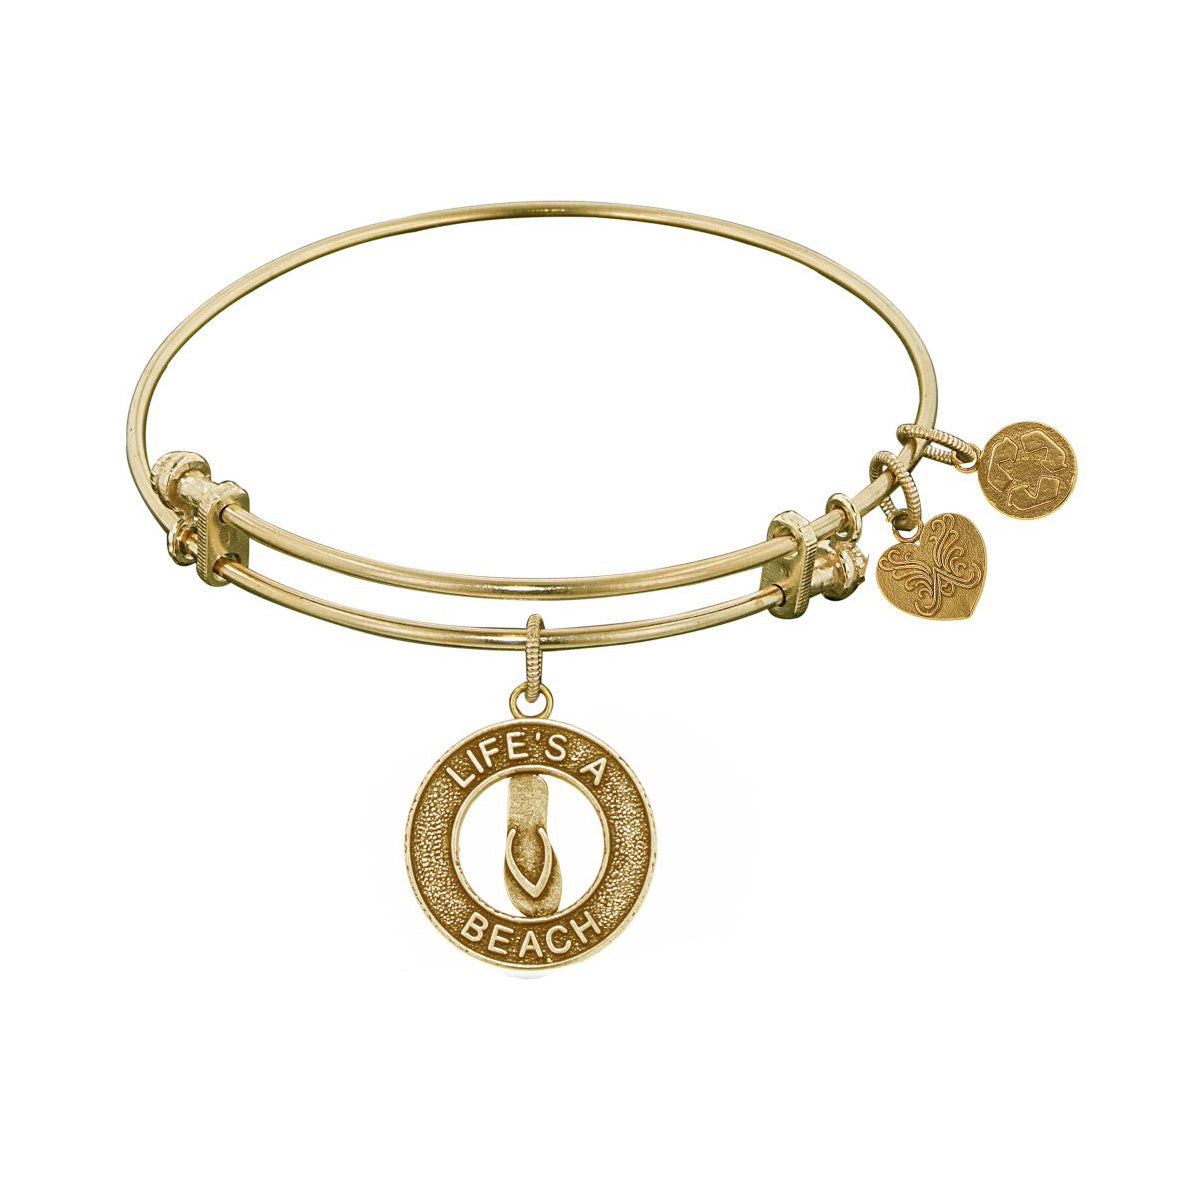 Stipple Finish Brass Life's a Beach Angelica Bangle Bracelet, 7.25" fine designer jewelry for men and women